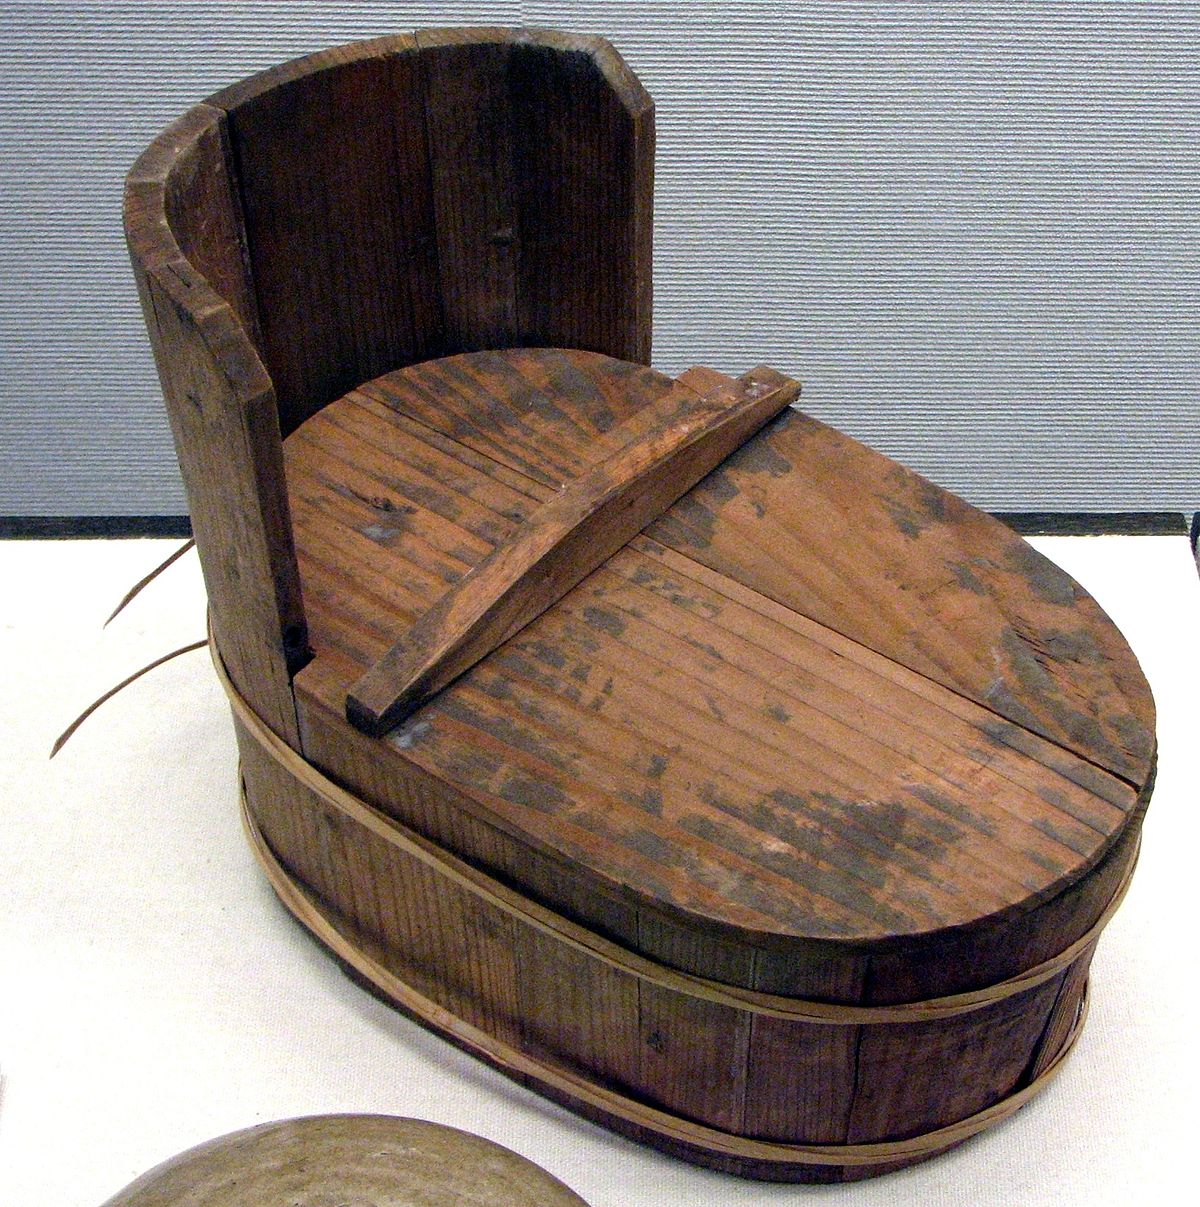 File:Pot de chambre 1.jpg - Wikimedia Commons